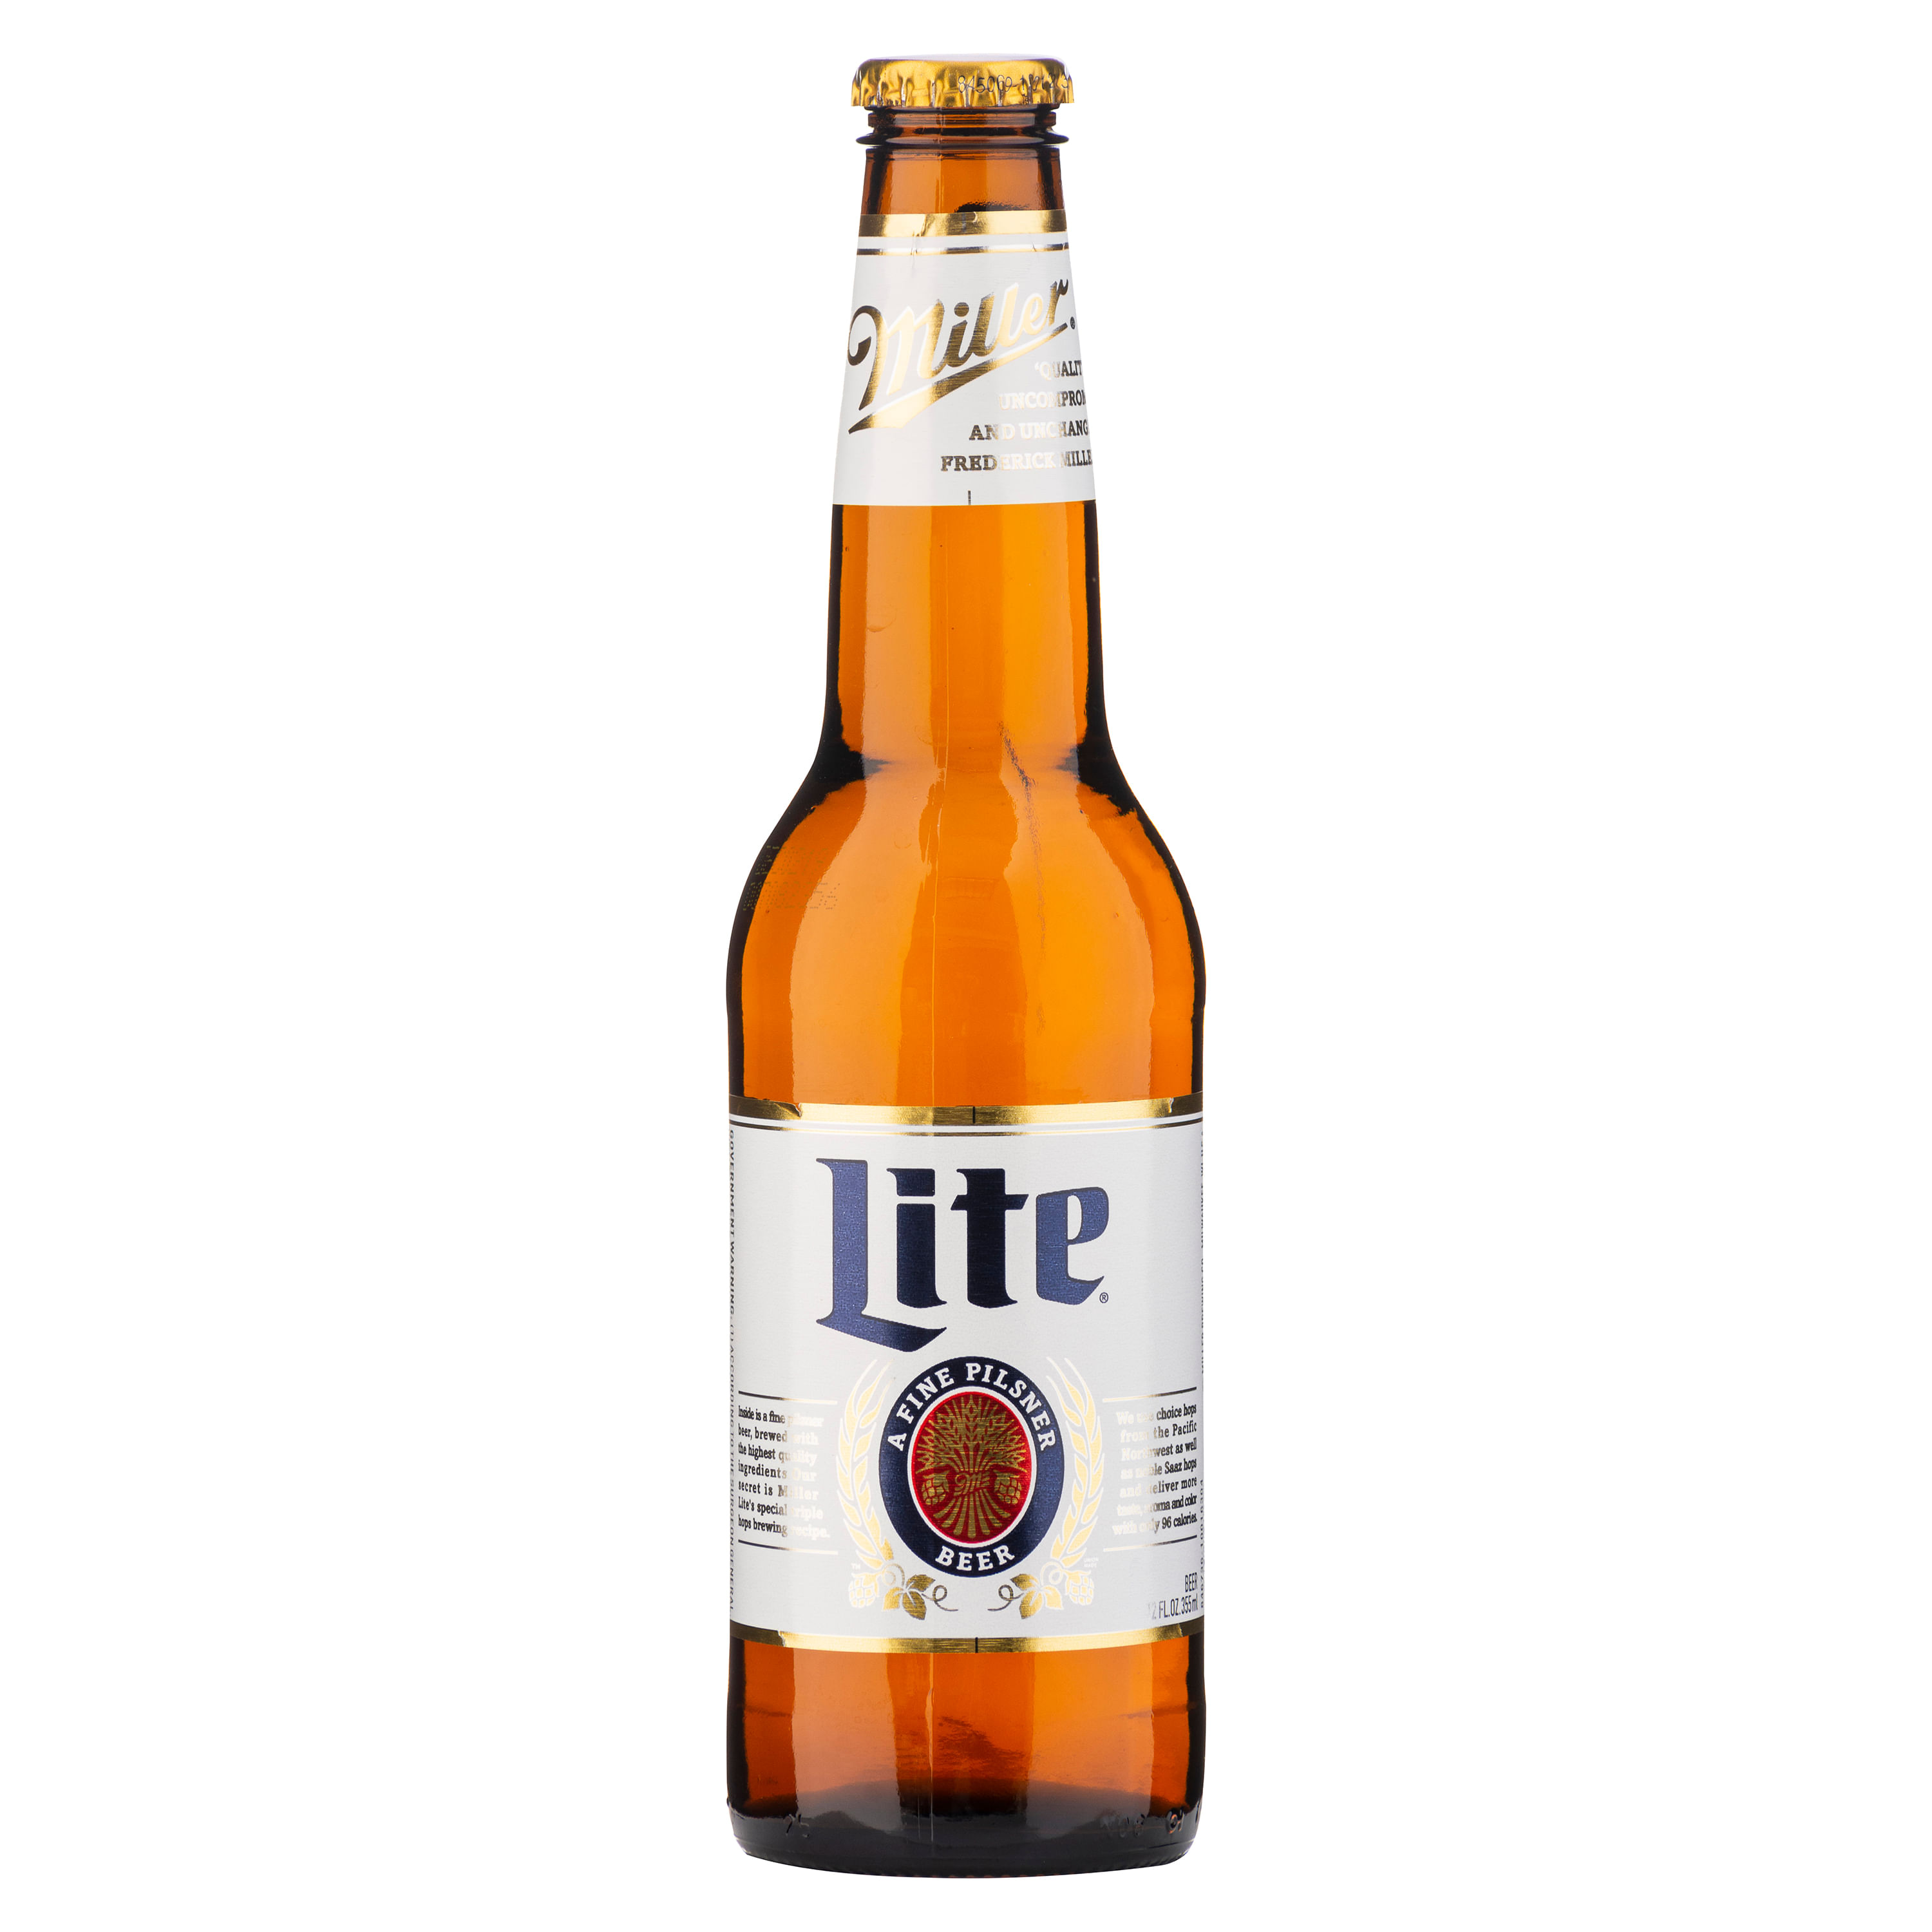 Cerveza-Miller-Lite-Vidrio-355ml-1-34872